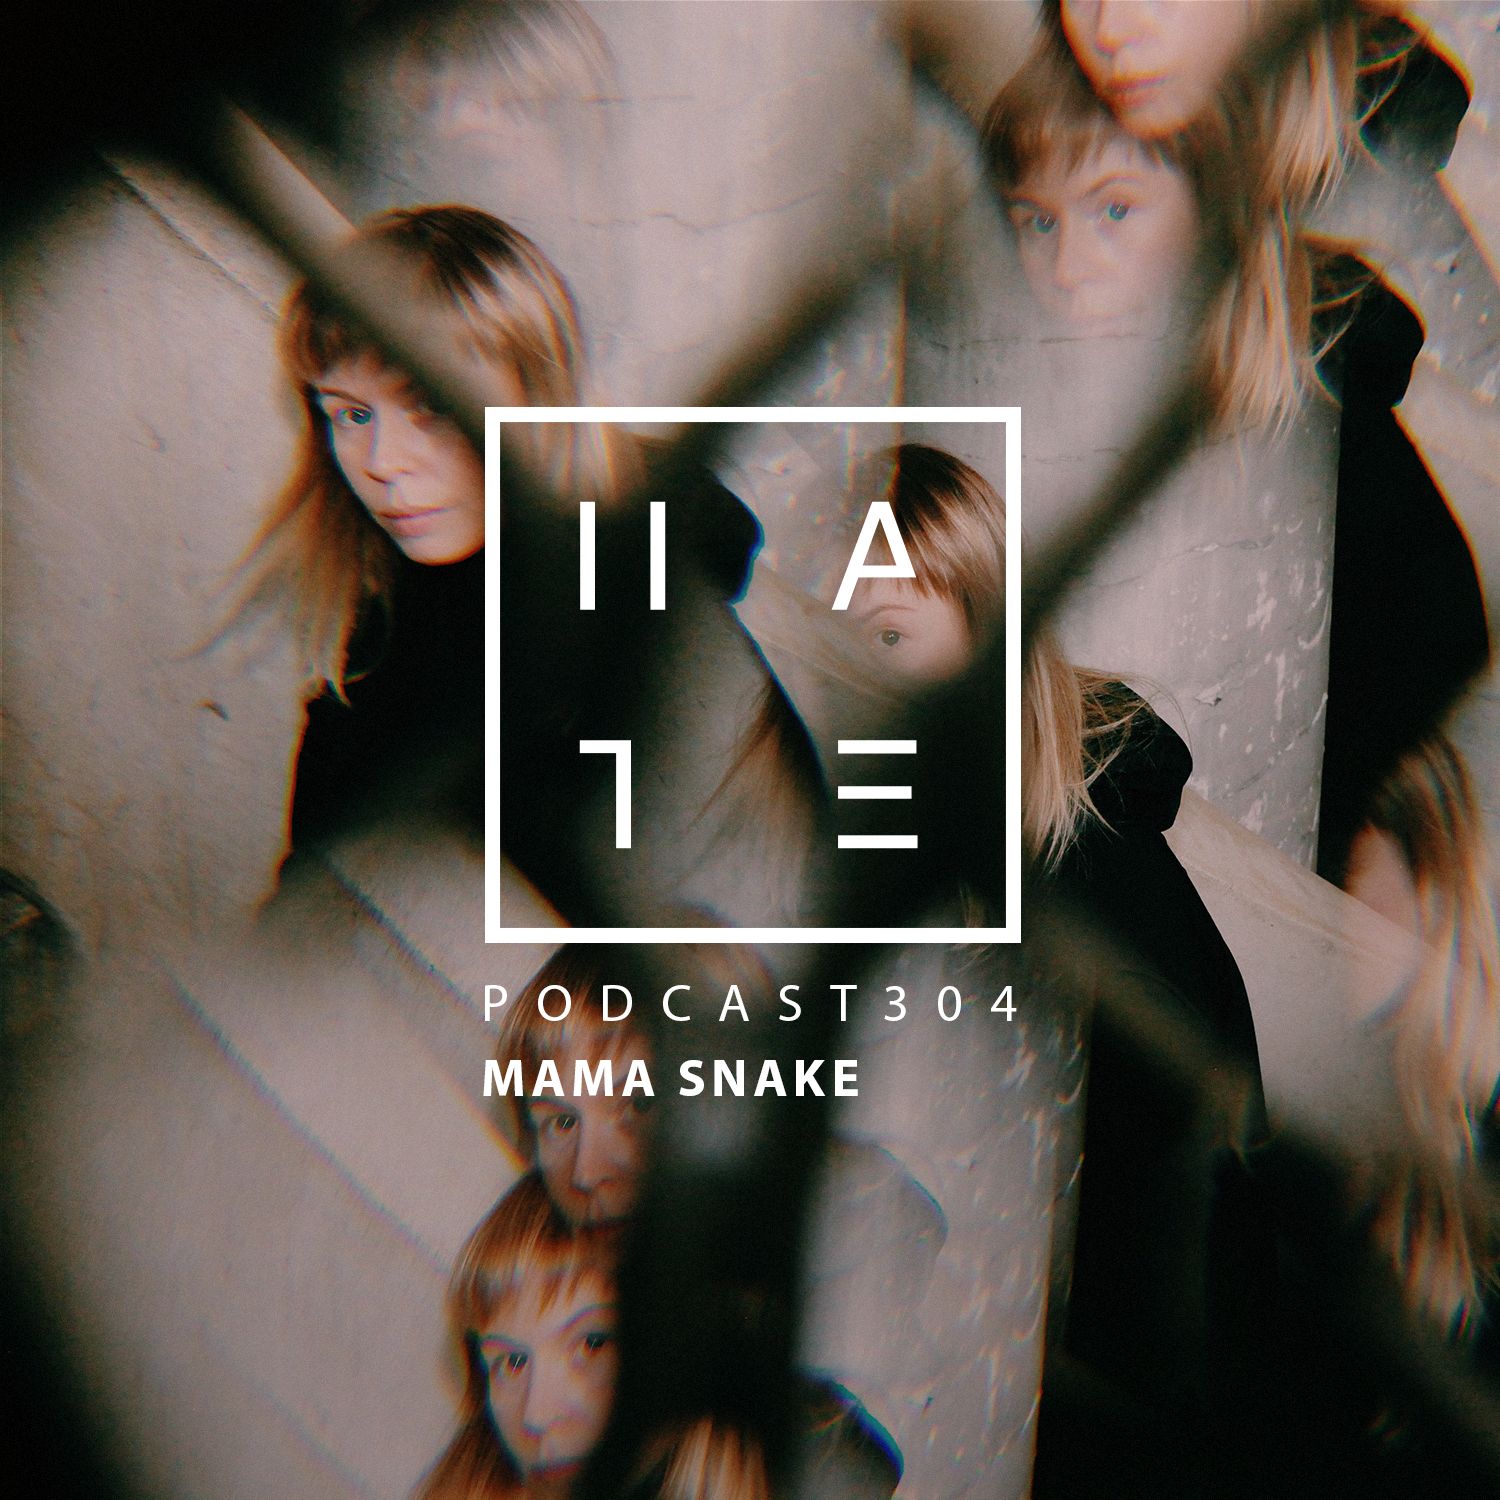 Unduh Mama Snake - HATE Podcast 304